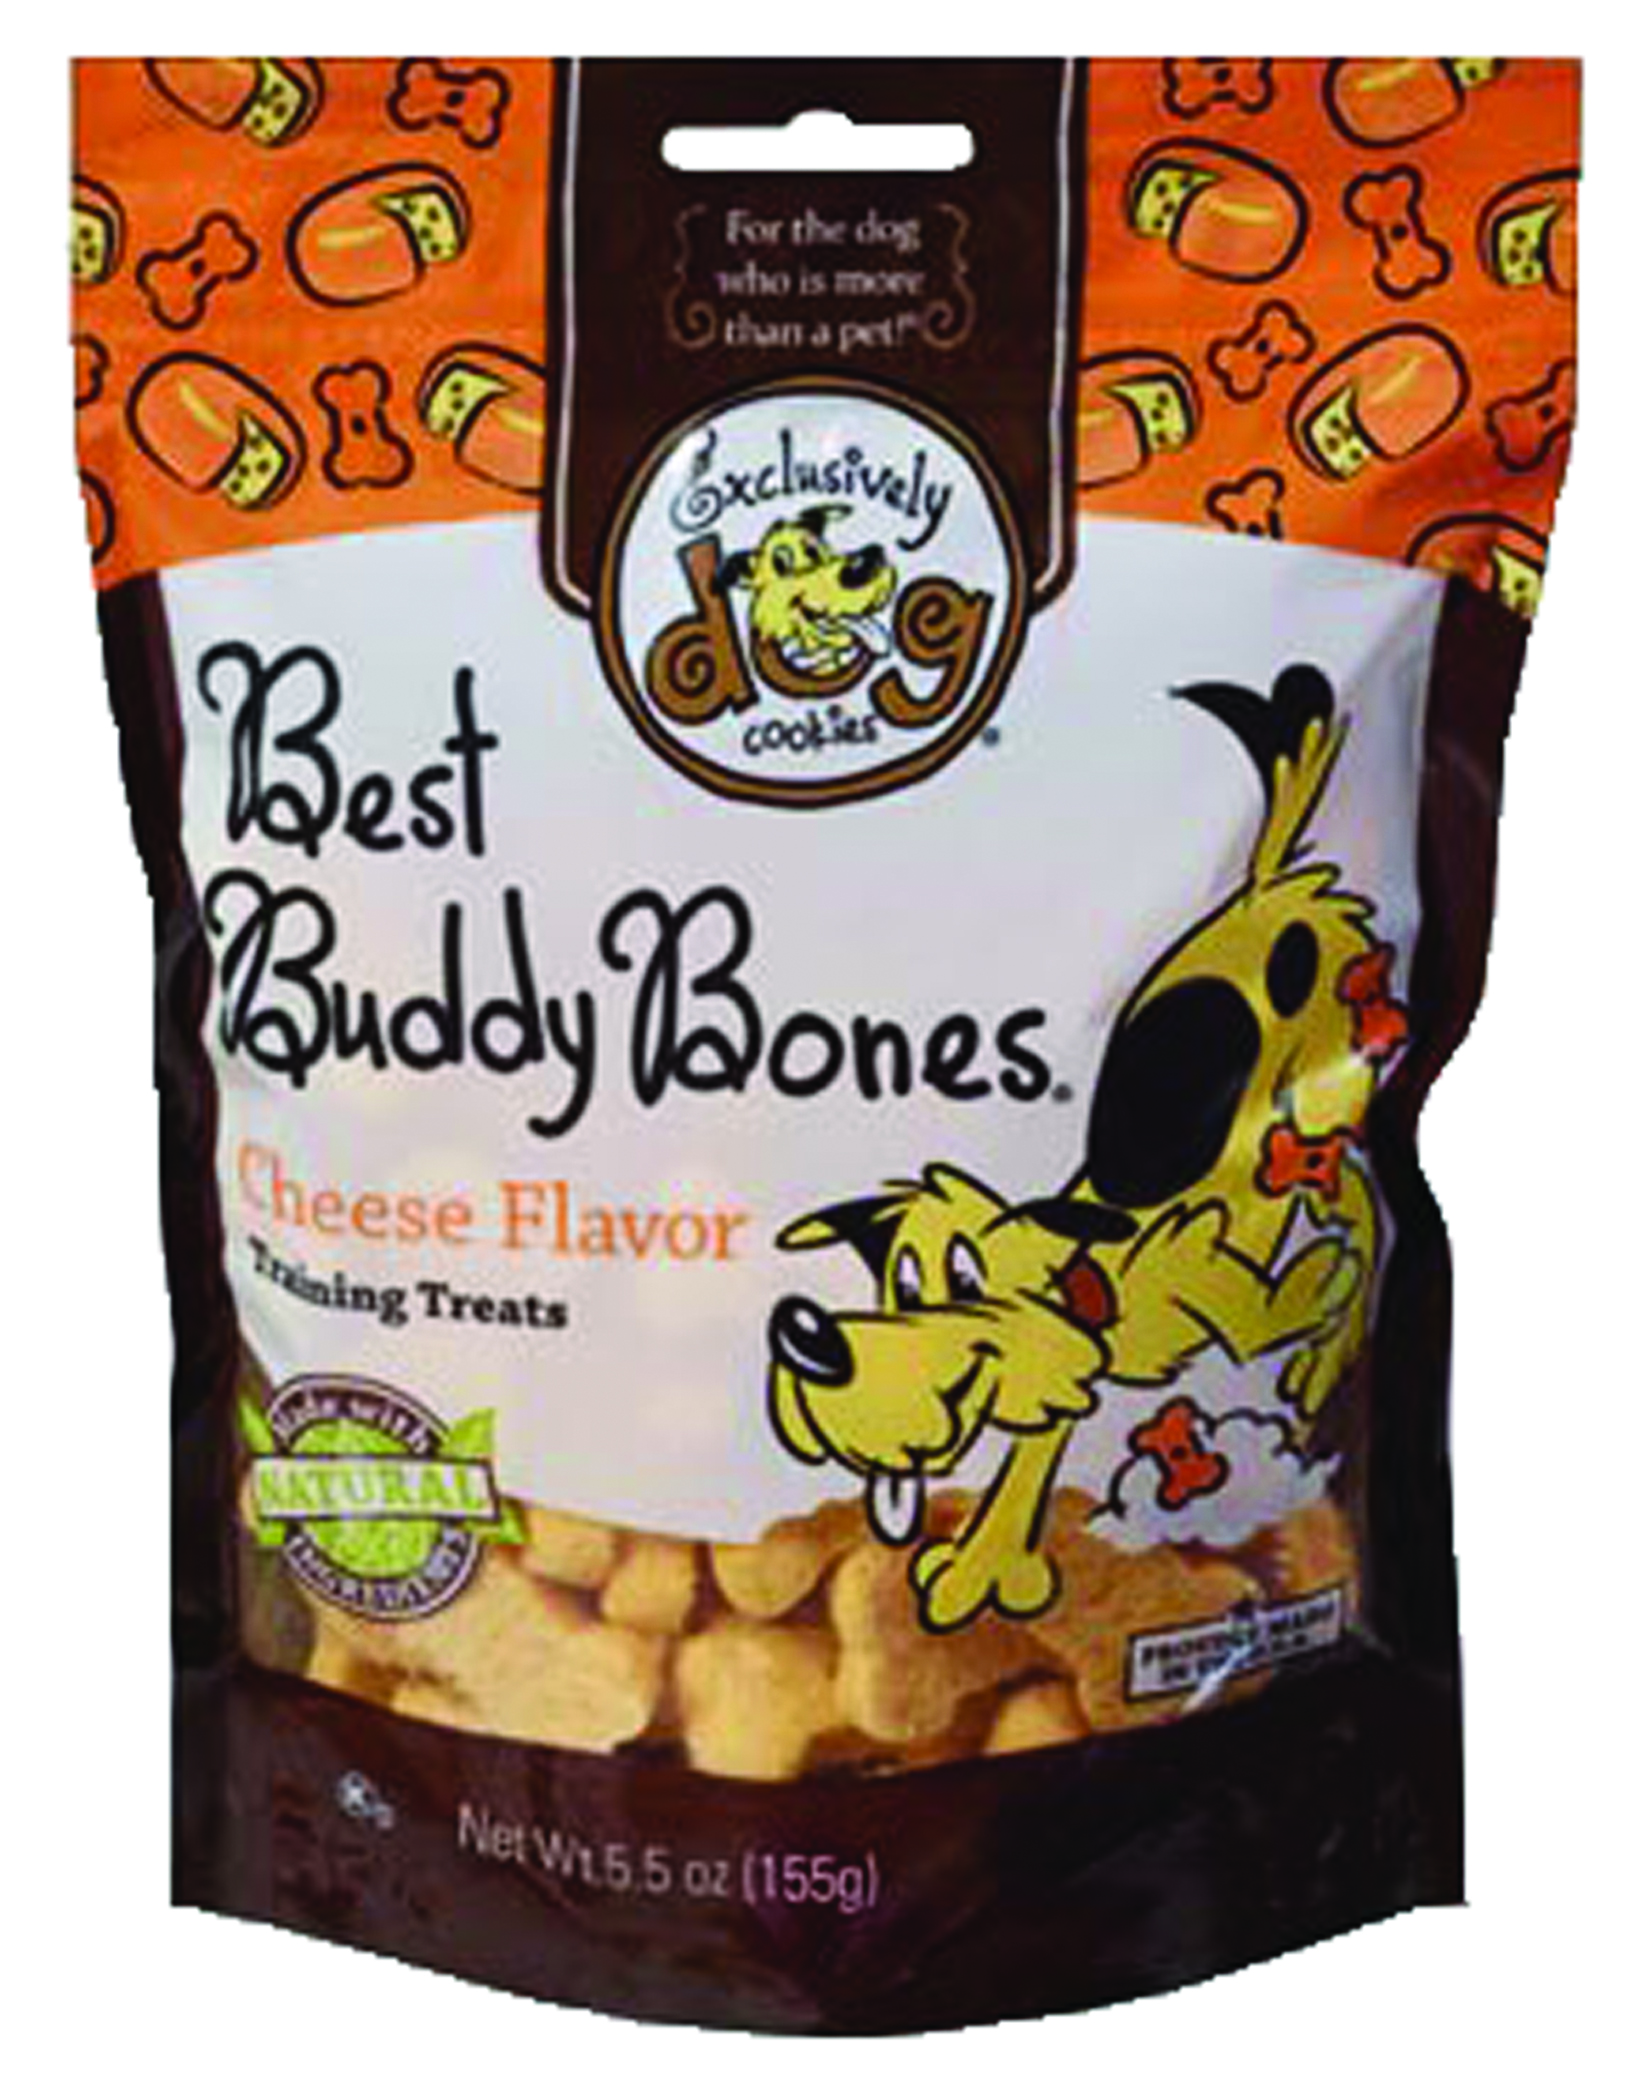 Best Buddy Bones Sml Cheese